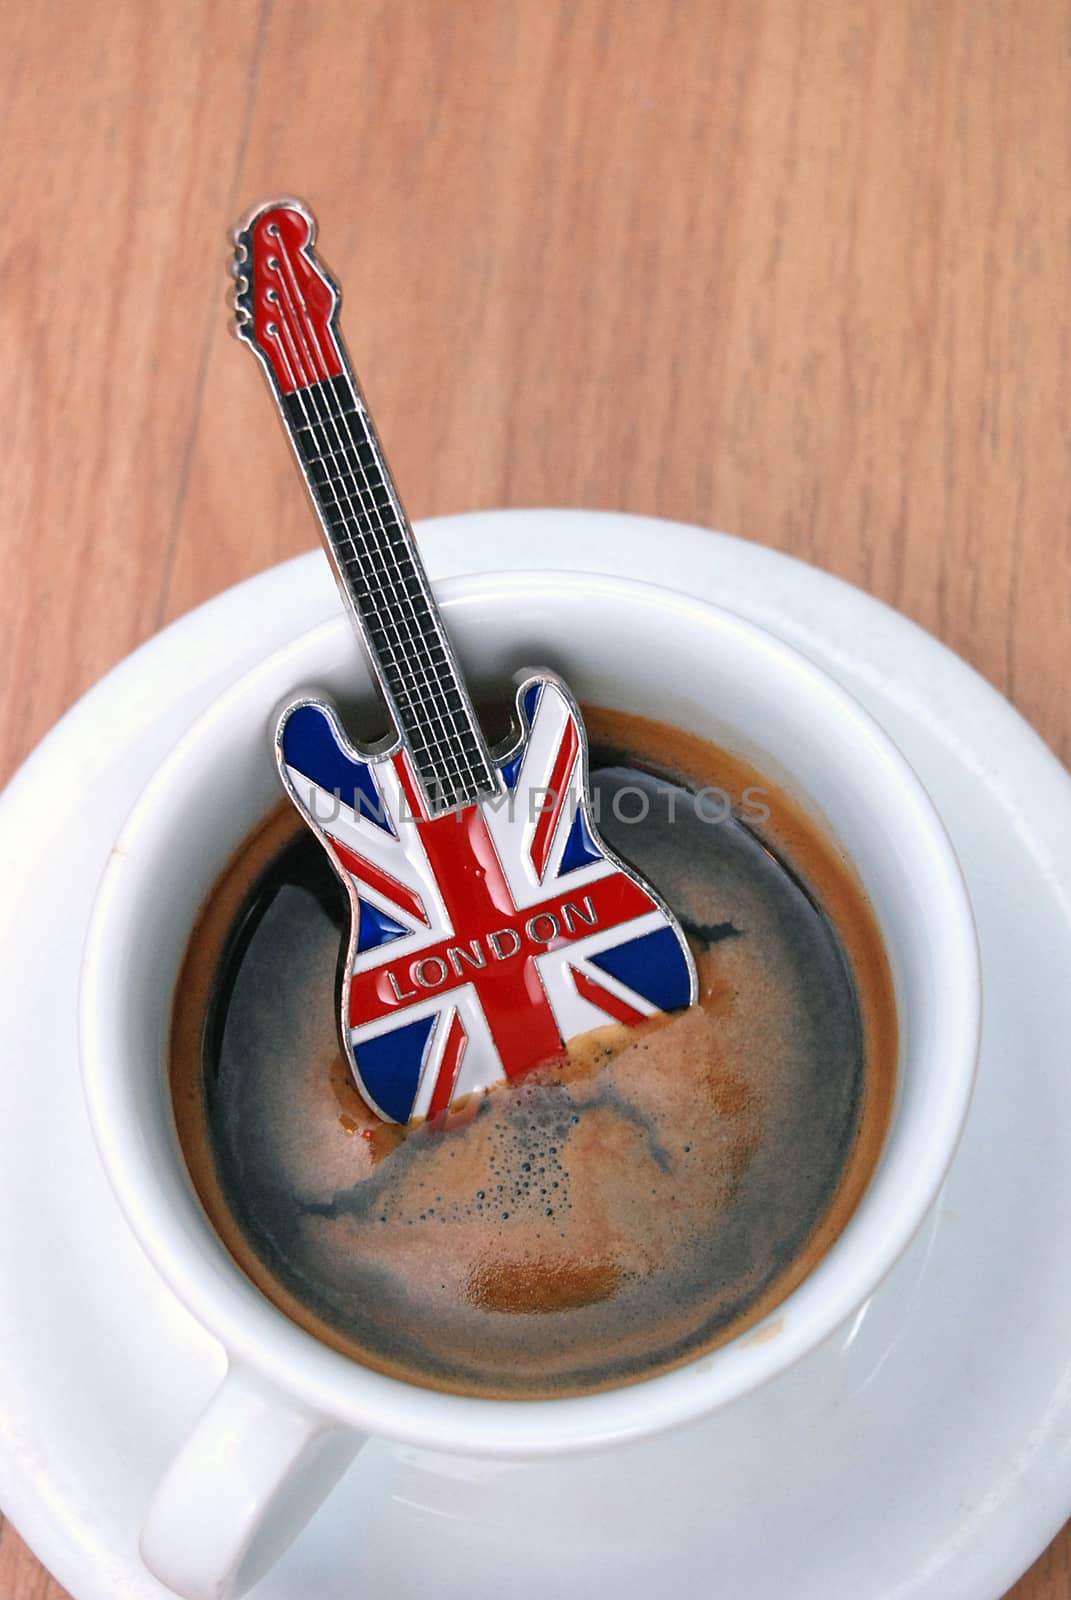 guitar souvenir from london in espresso cup by nehru